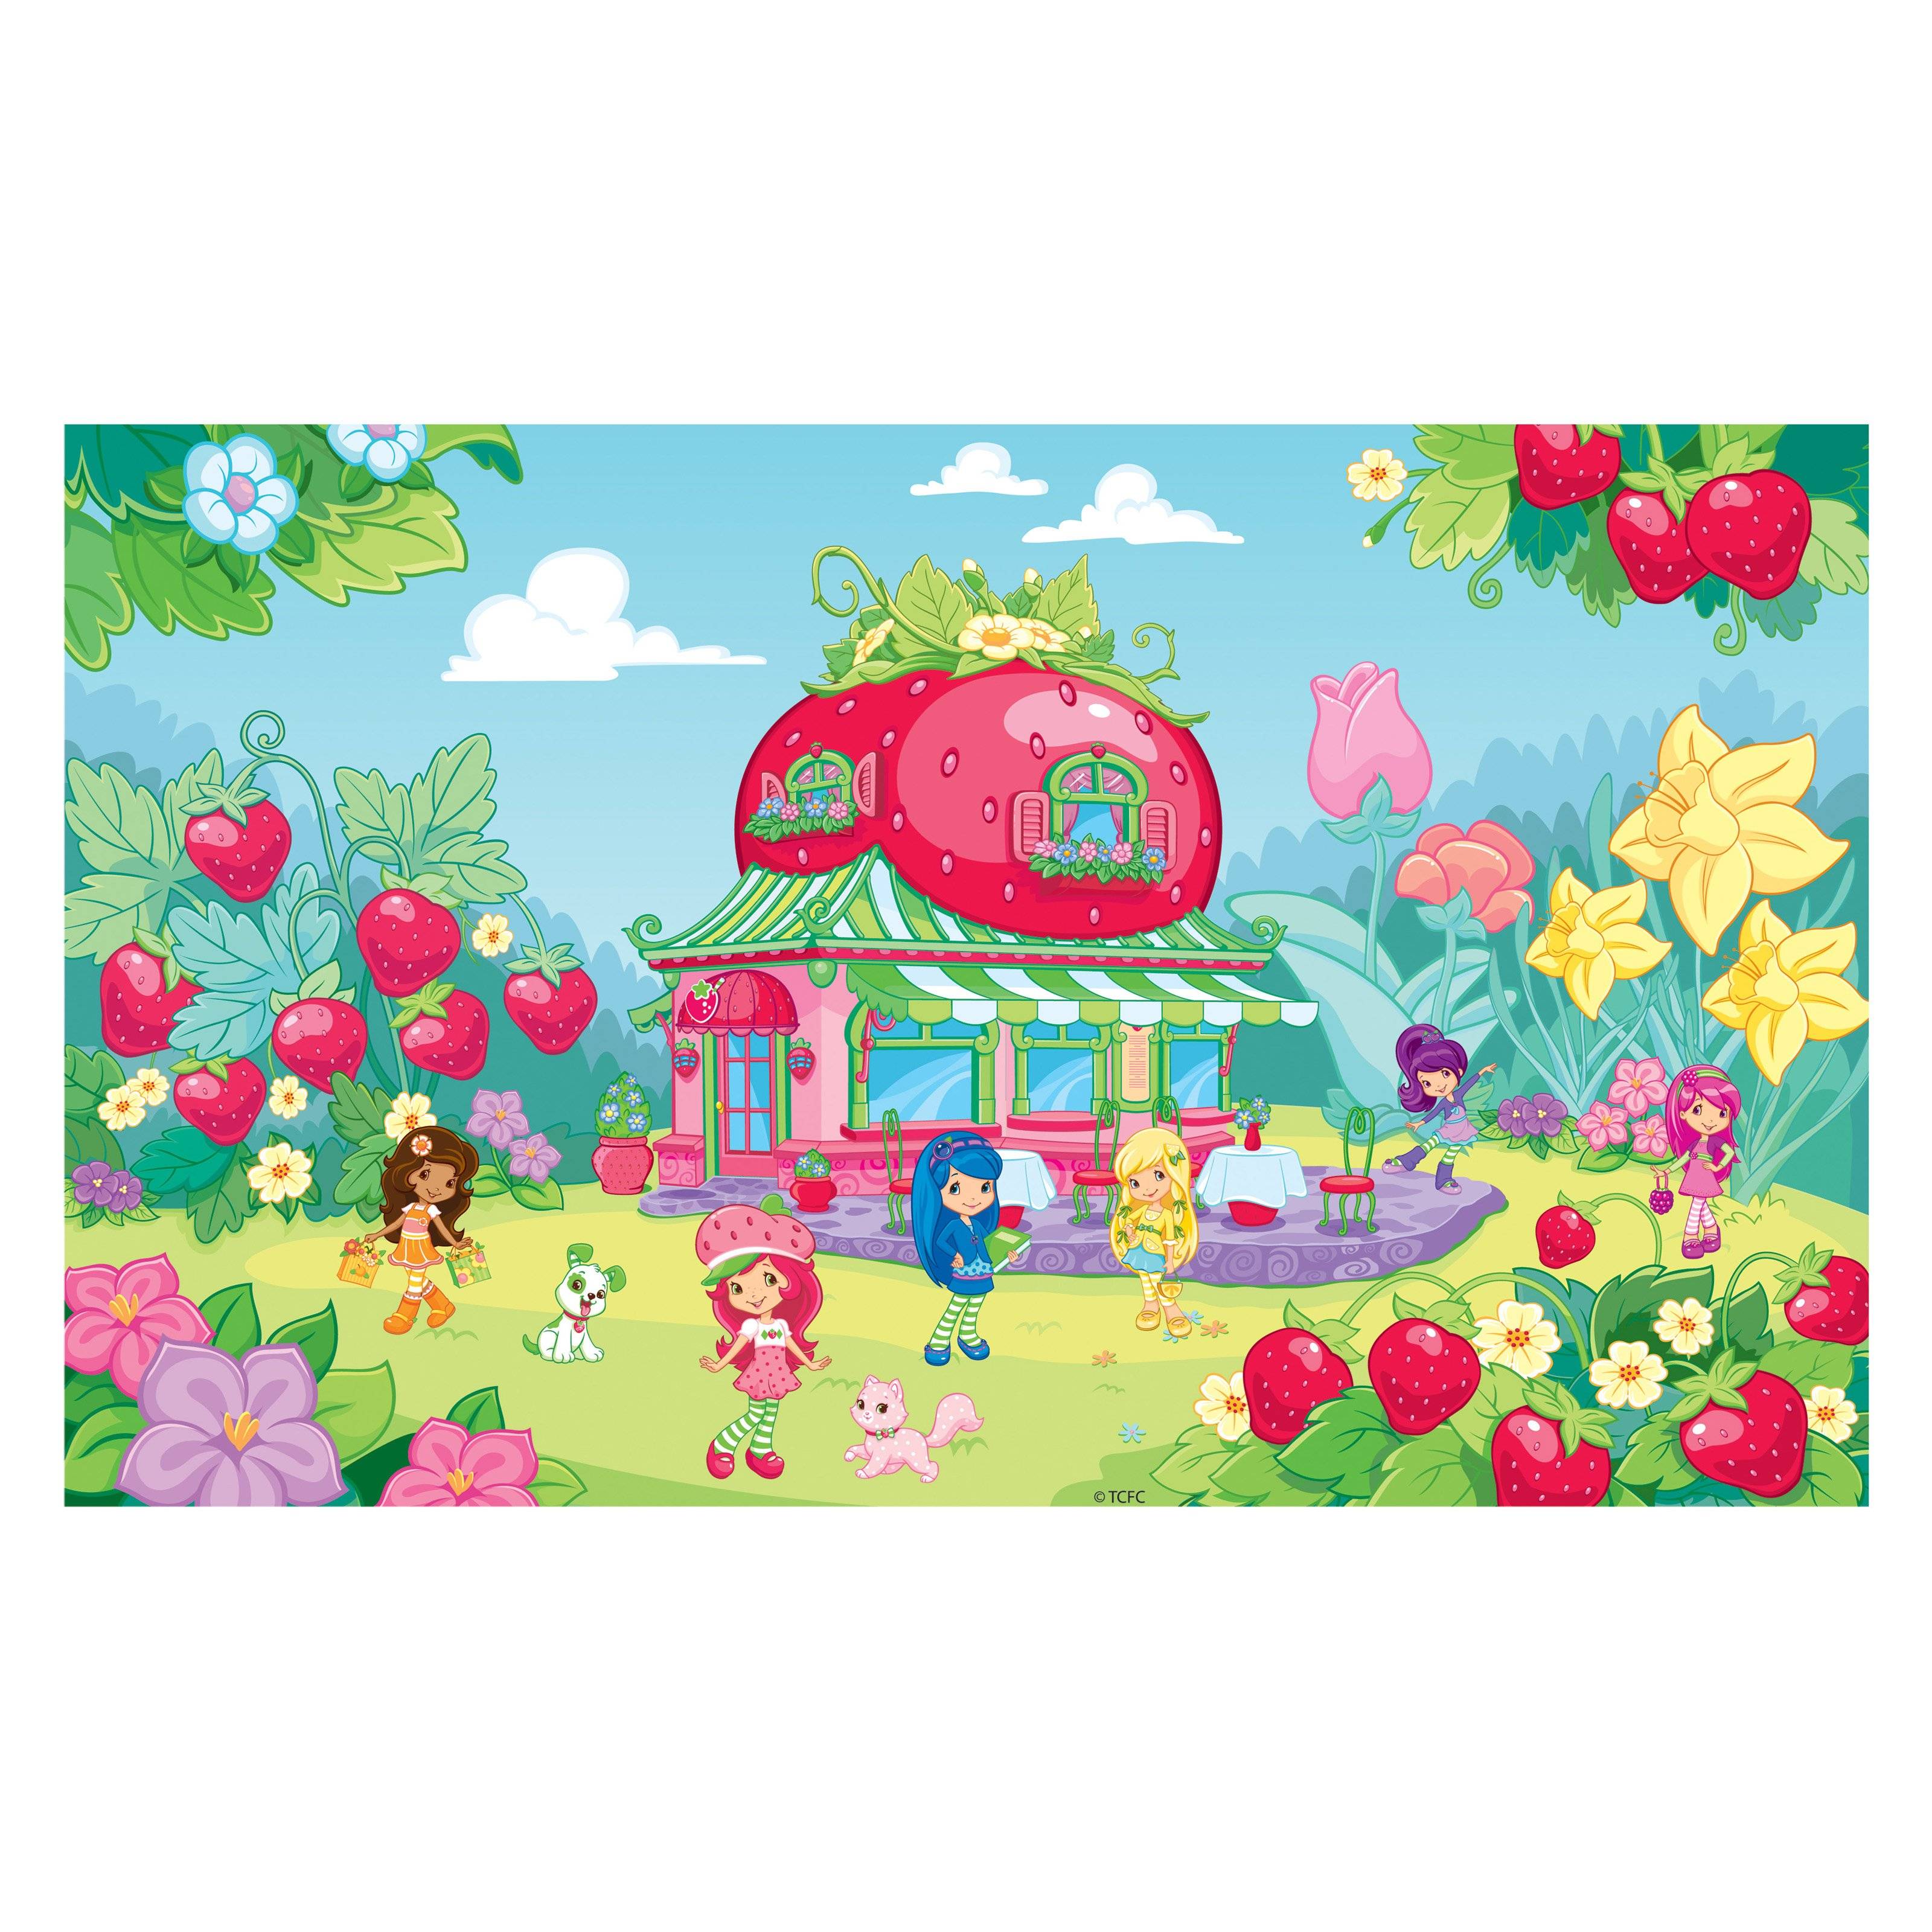 Strawberry Shortcake Bedroom Decor 24983 Free Desktop Wallpaper